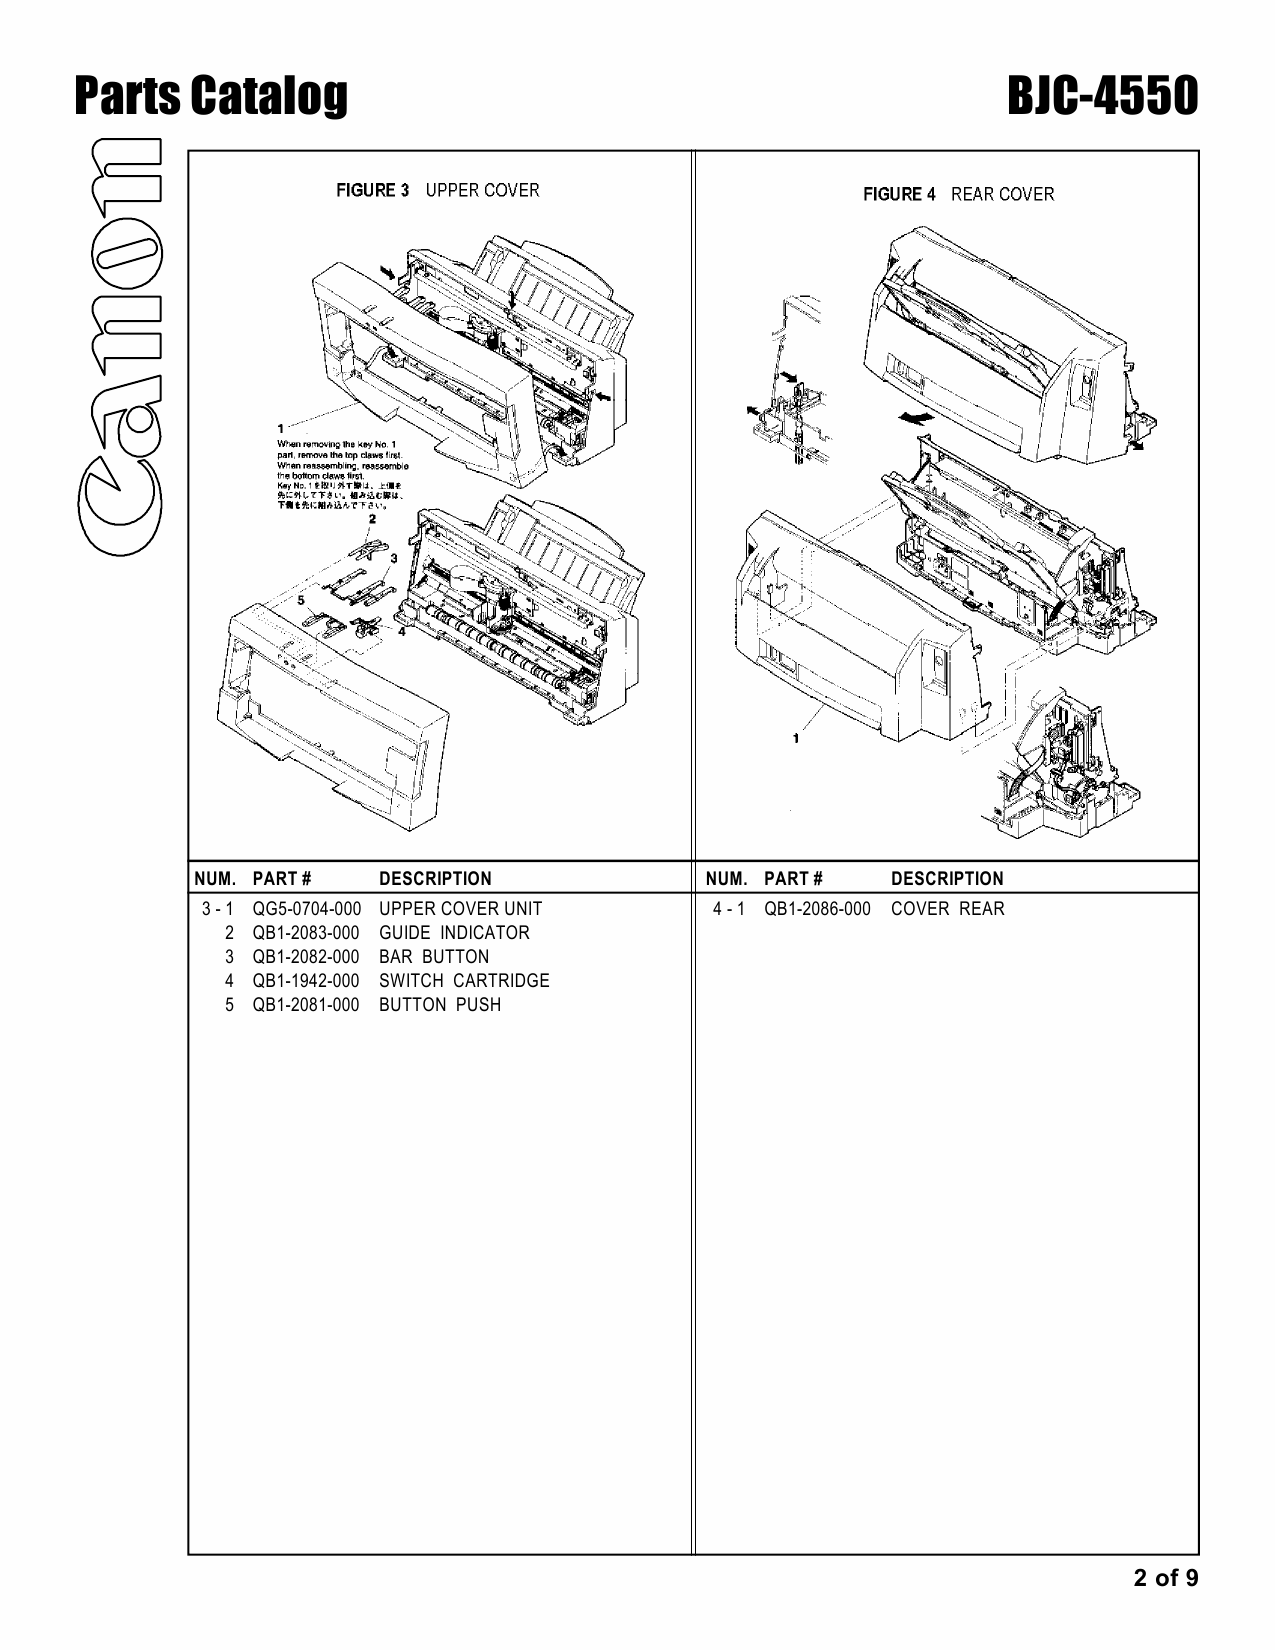 Canon BubbleJet BJC-4550 Parts Catalog Manual-2